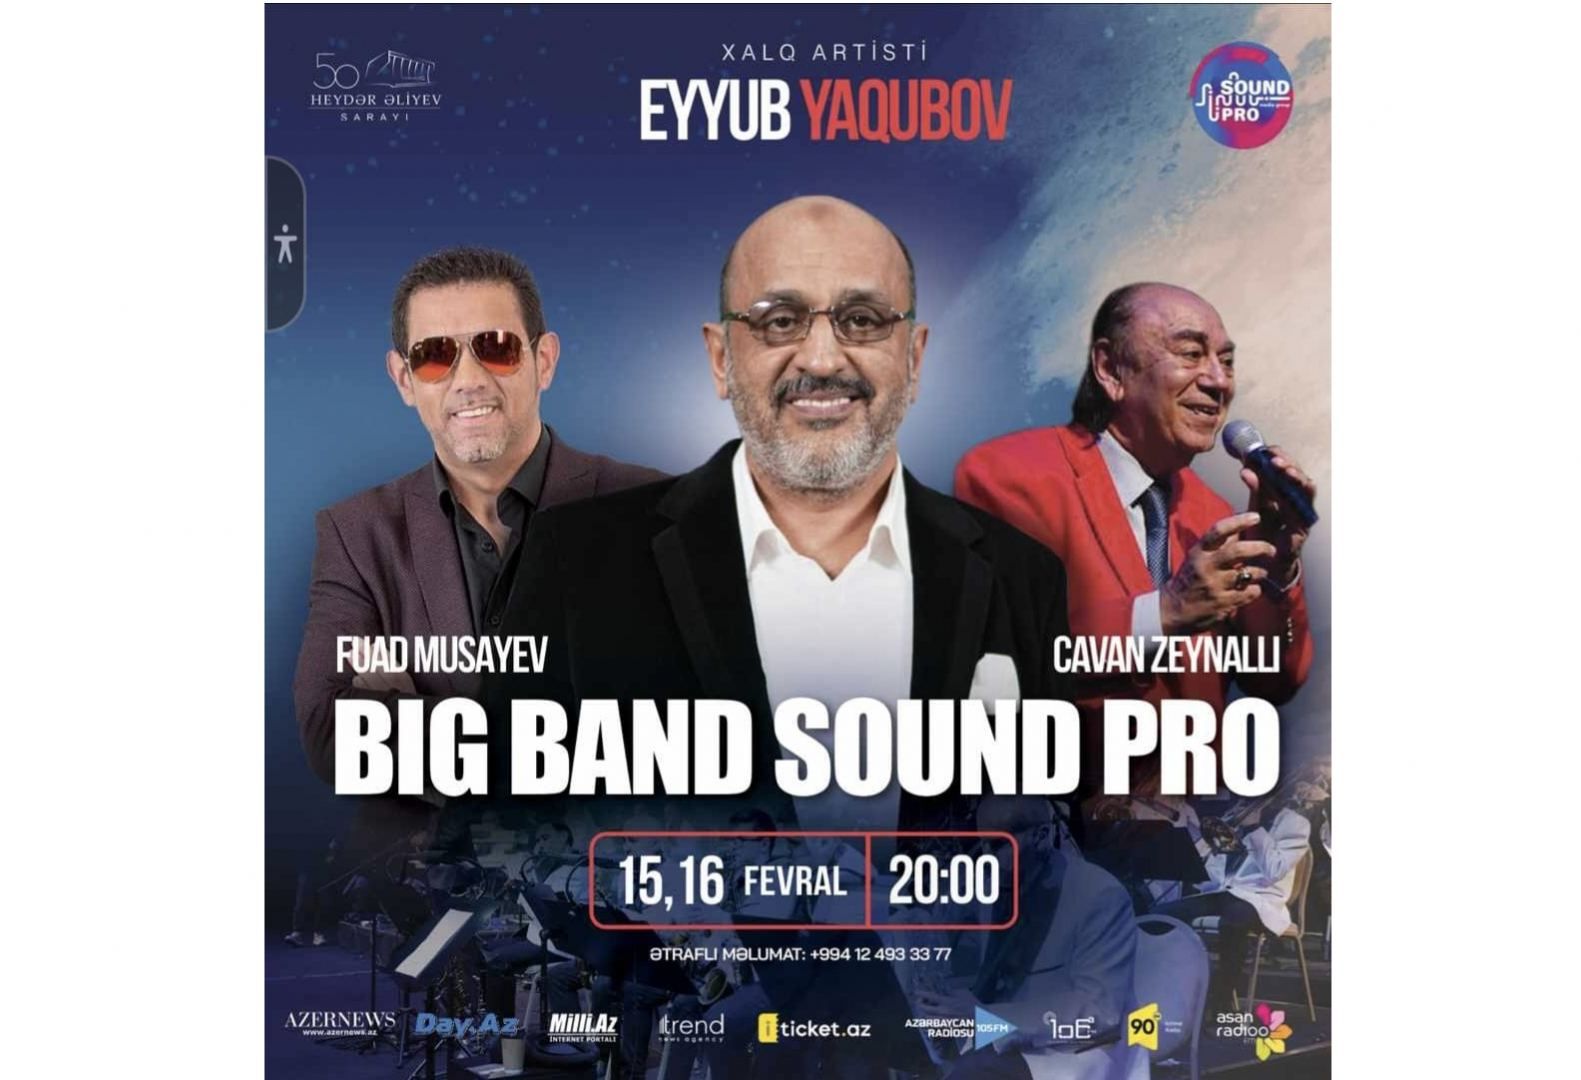 Eyyub Yagubov & Big Band Sound Pro to perform at Heydar Aliyev Palace [VIDEO]